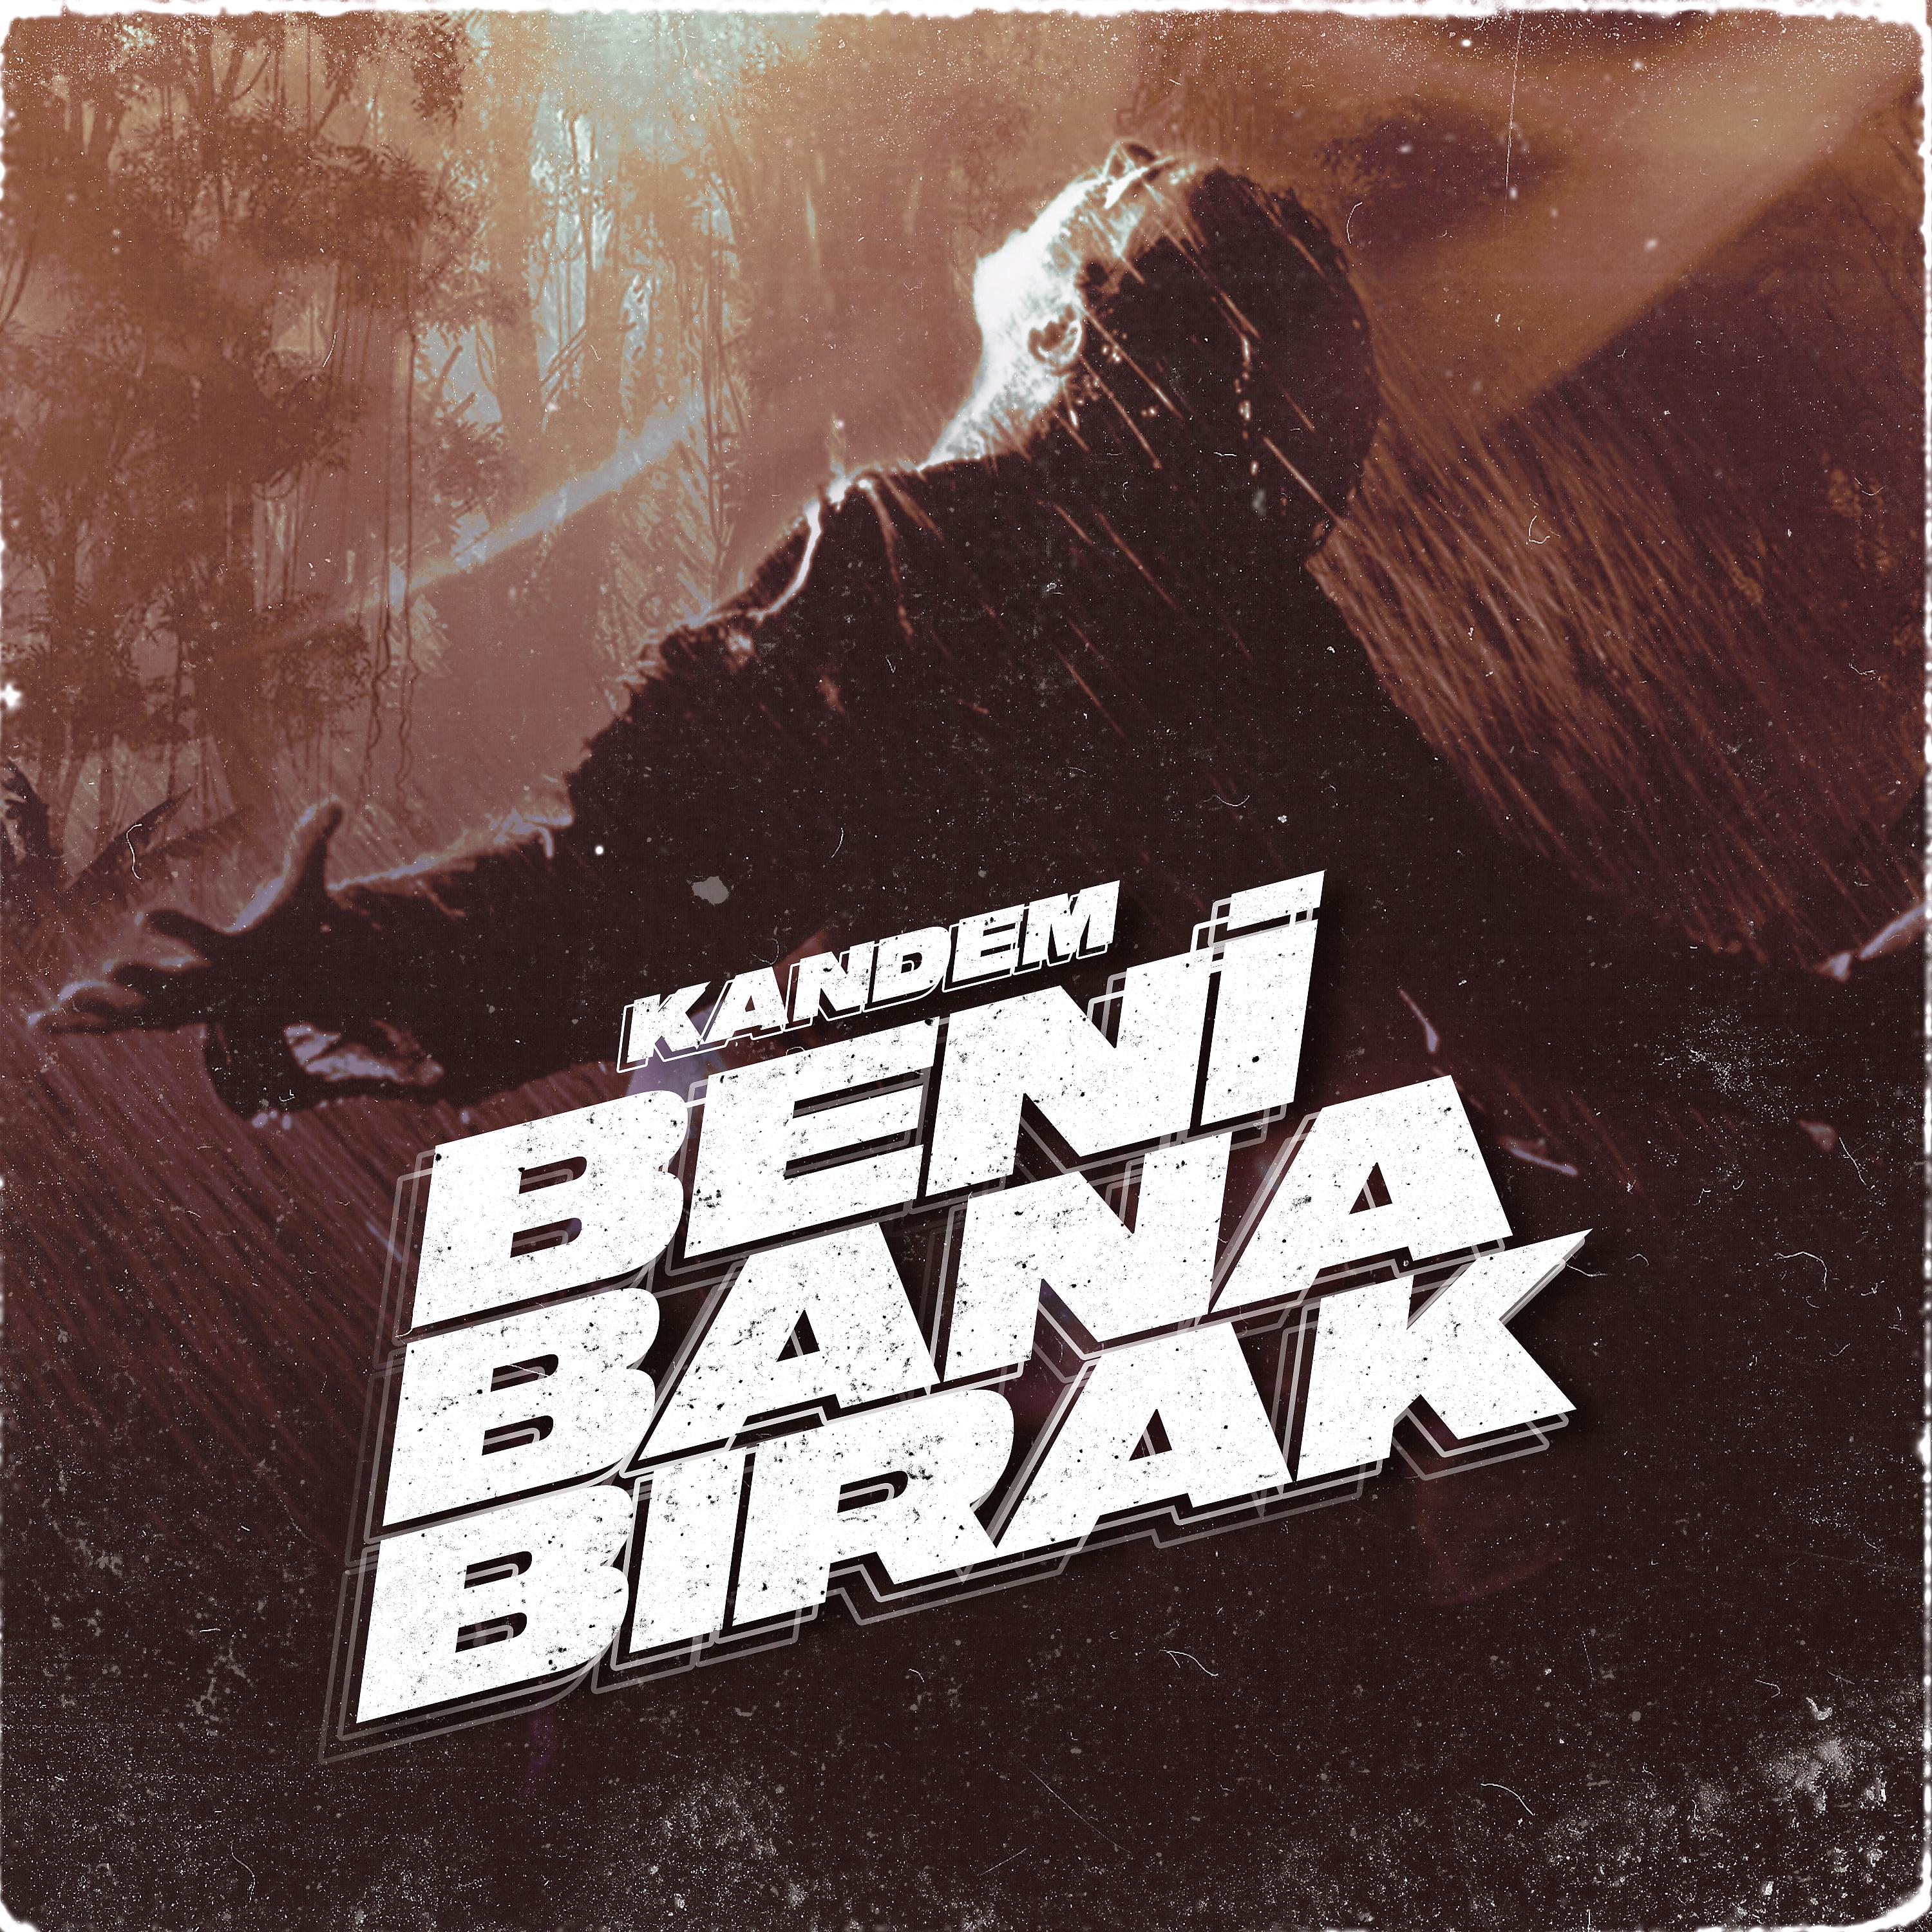 Постер альбома Beni Bana Bırak